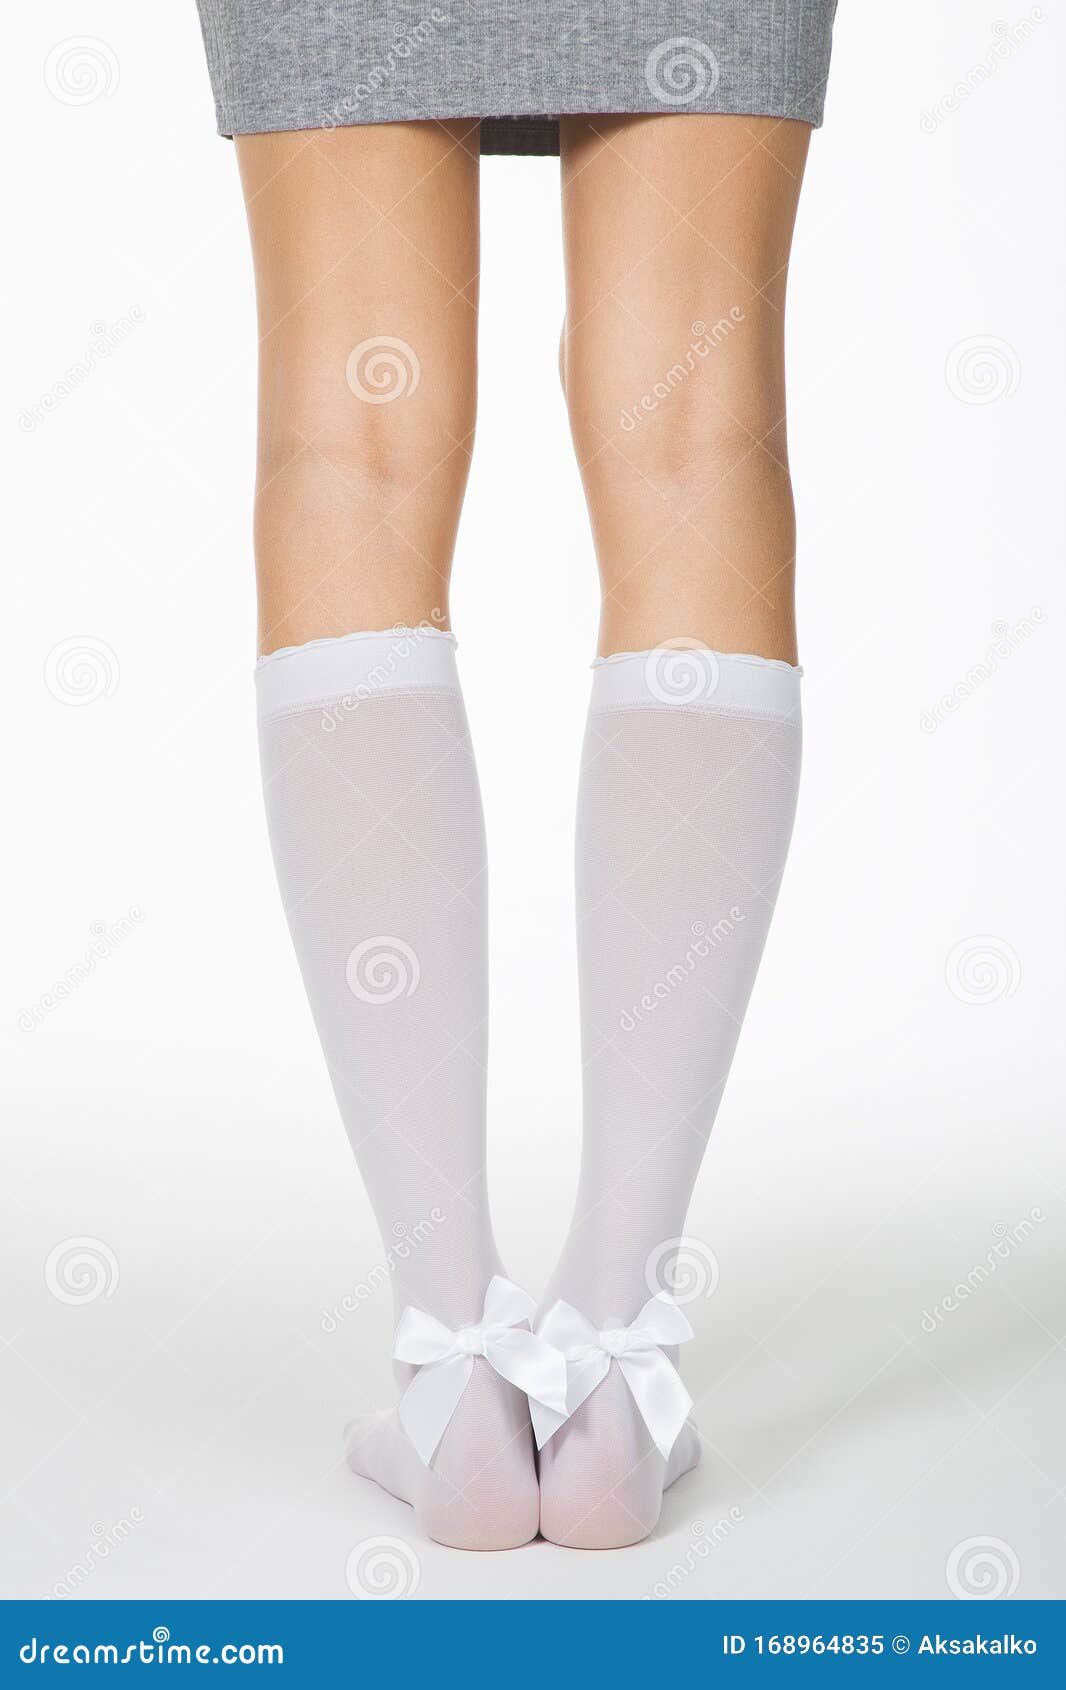 Back View of Beautiful Female Legs in White Knee Socks Stock Image ...